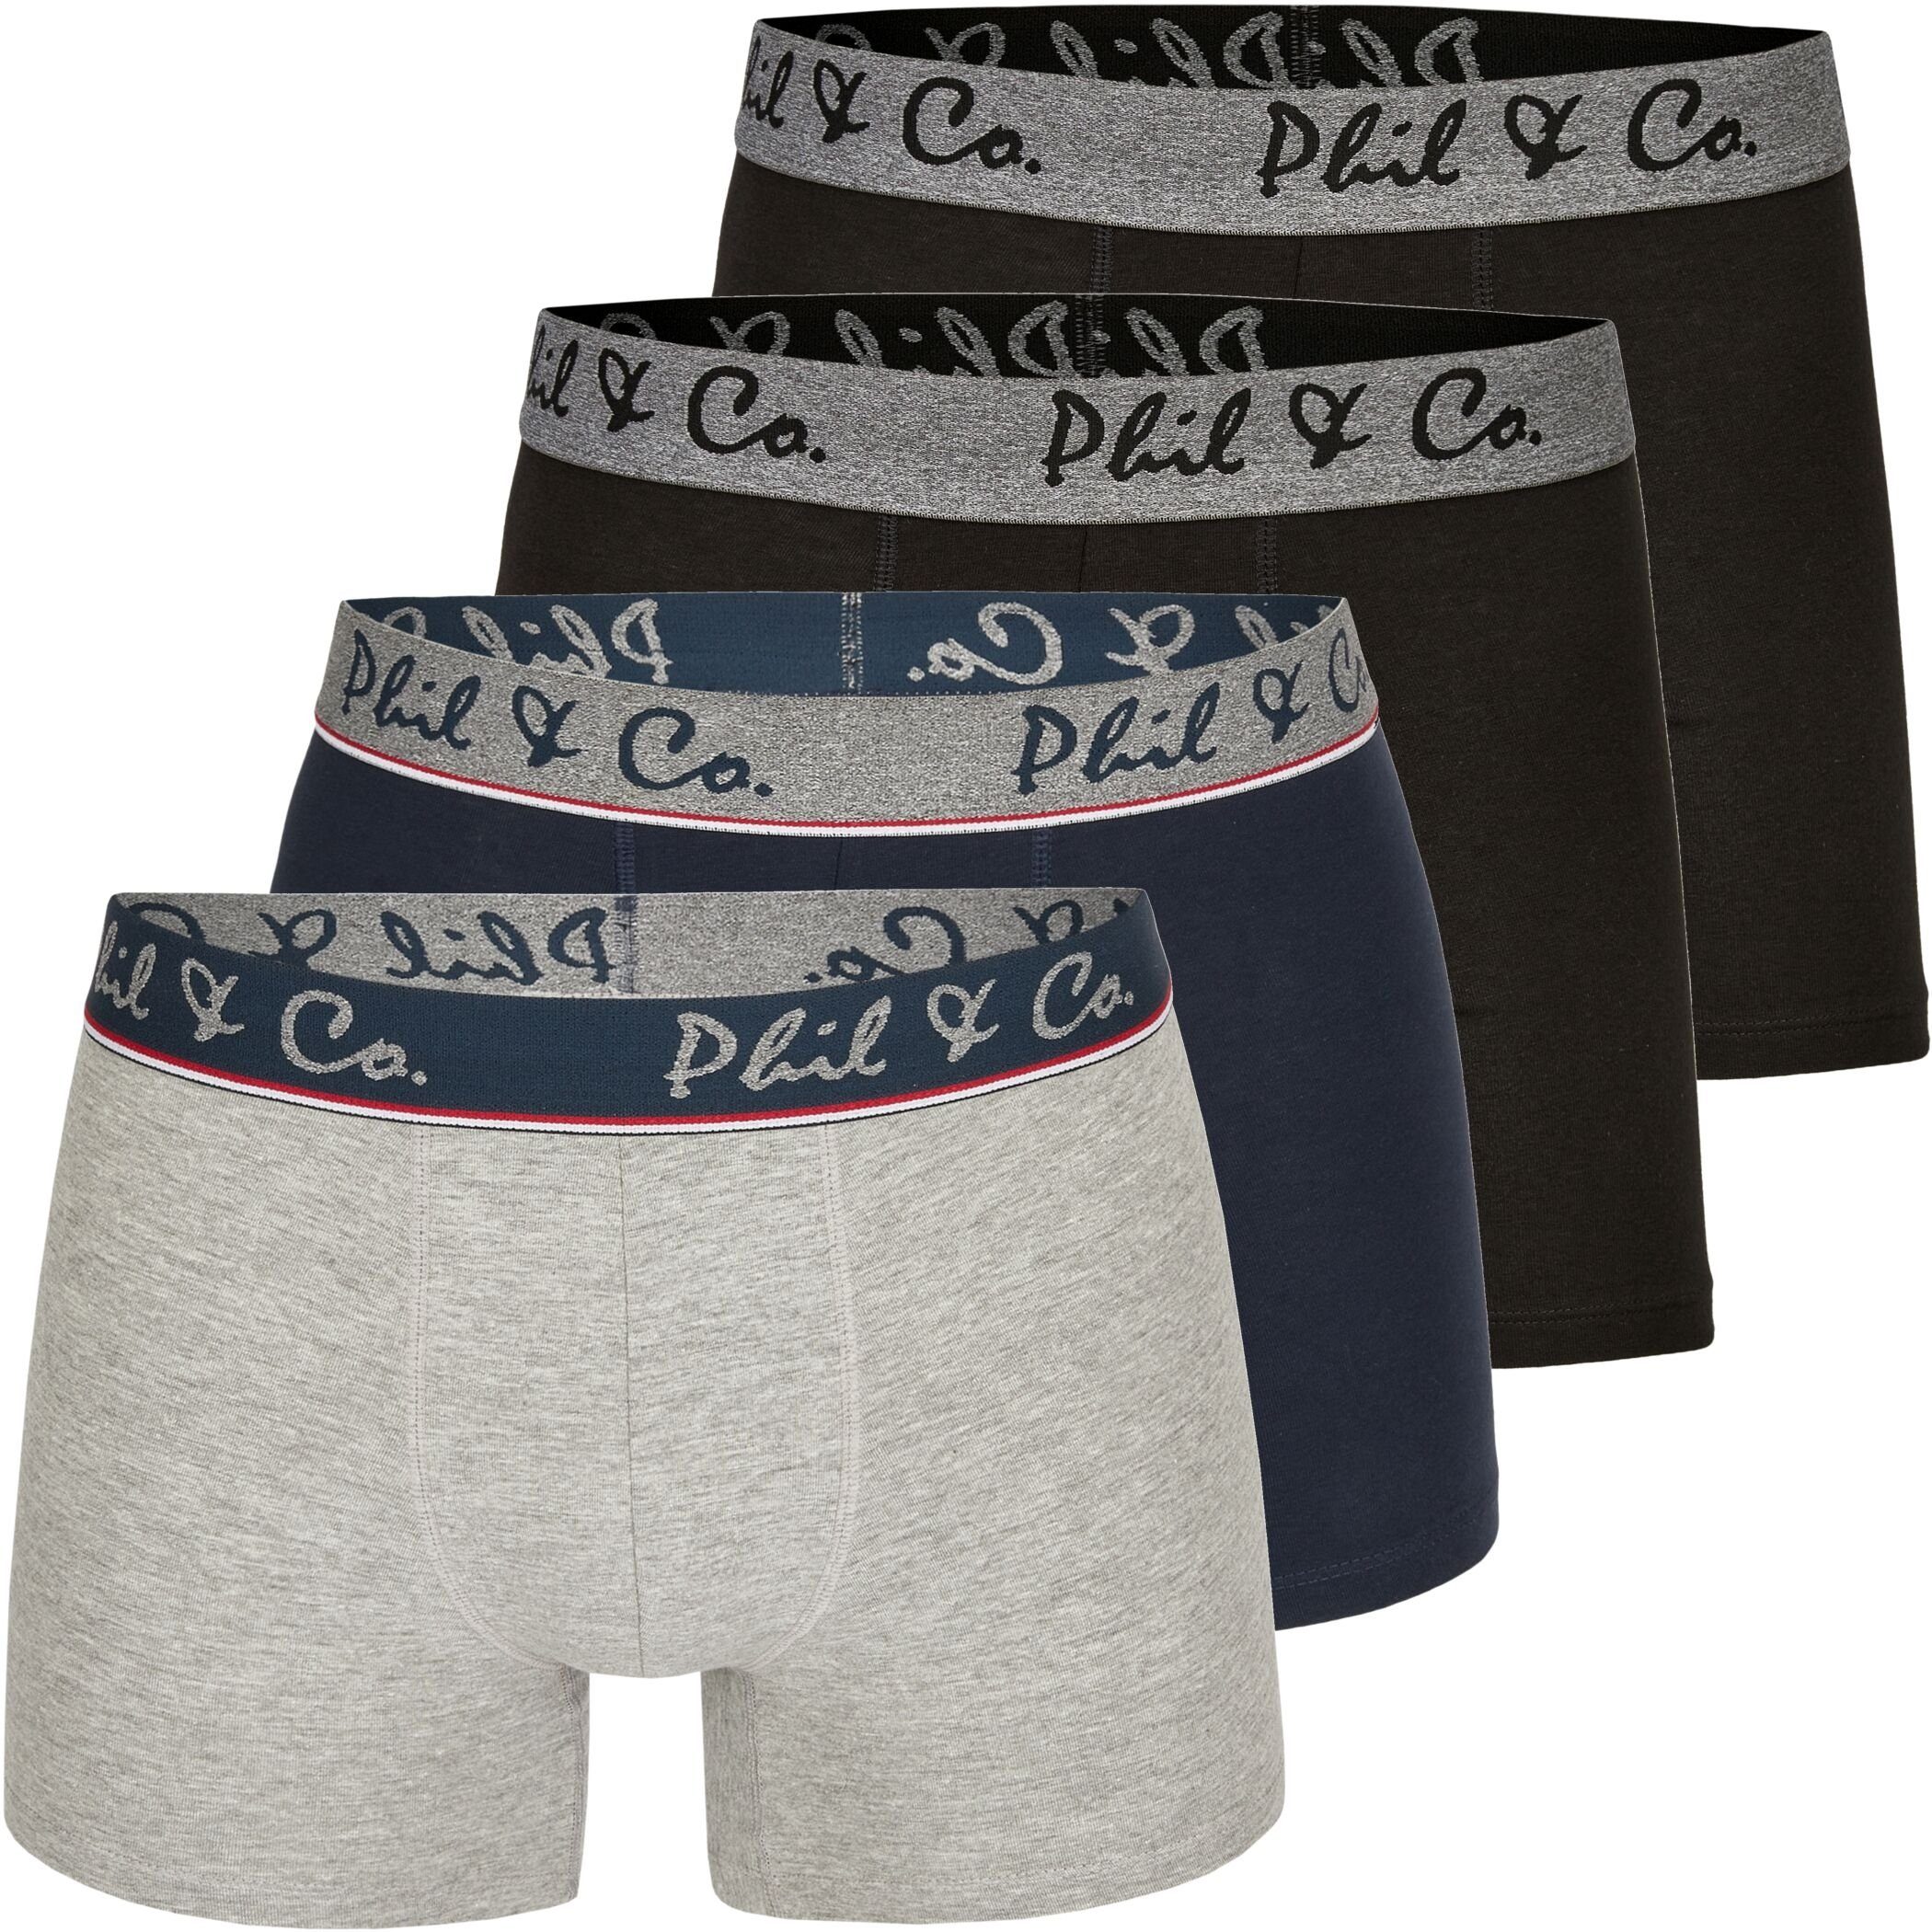 & Jersey 02 Phil 4er DESIGN Co FARBWAHL Boxershorts Short Pant & Berlin Pack Co. Phil Boxershorts Trunk (1-St)